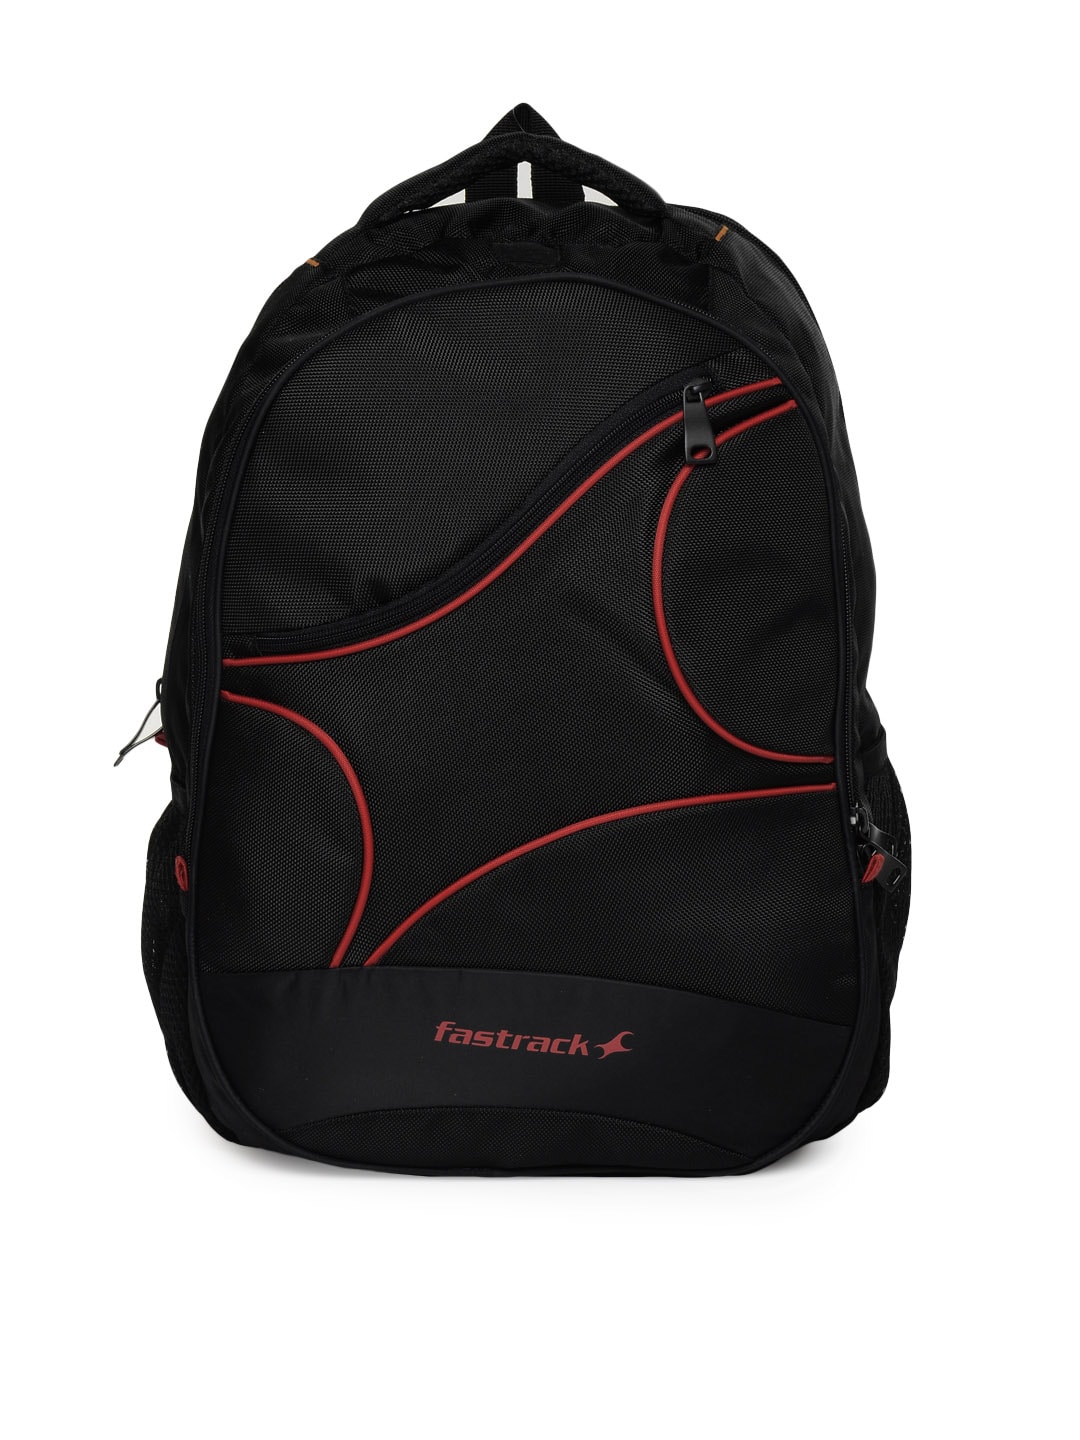 Fastrack Unisex Black Backpack